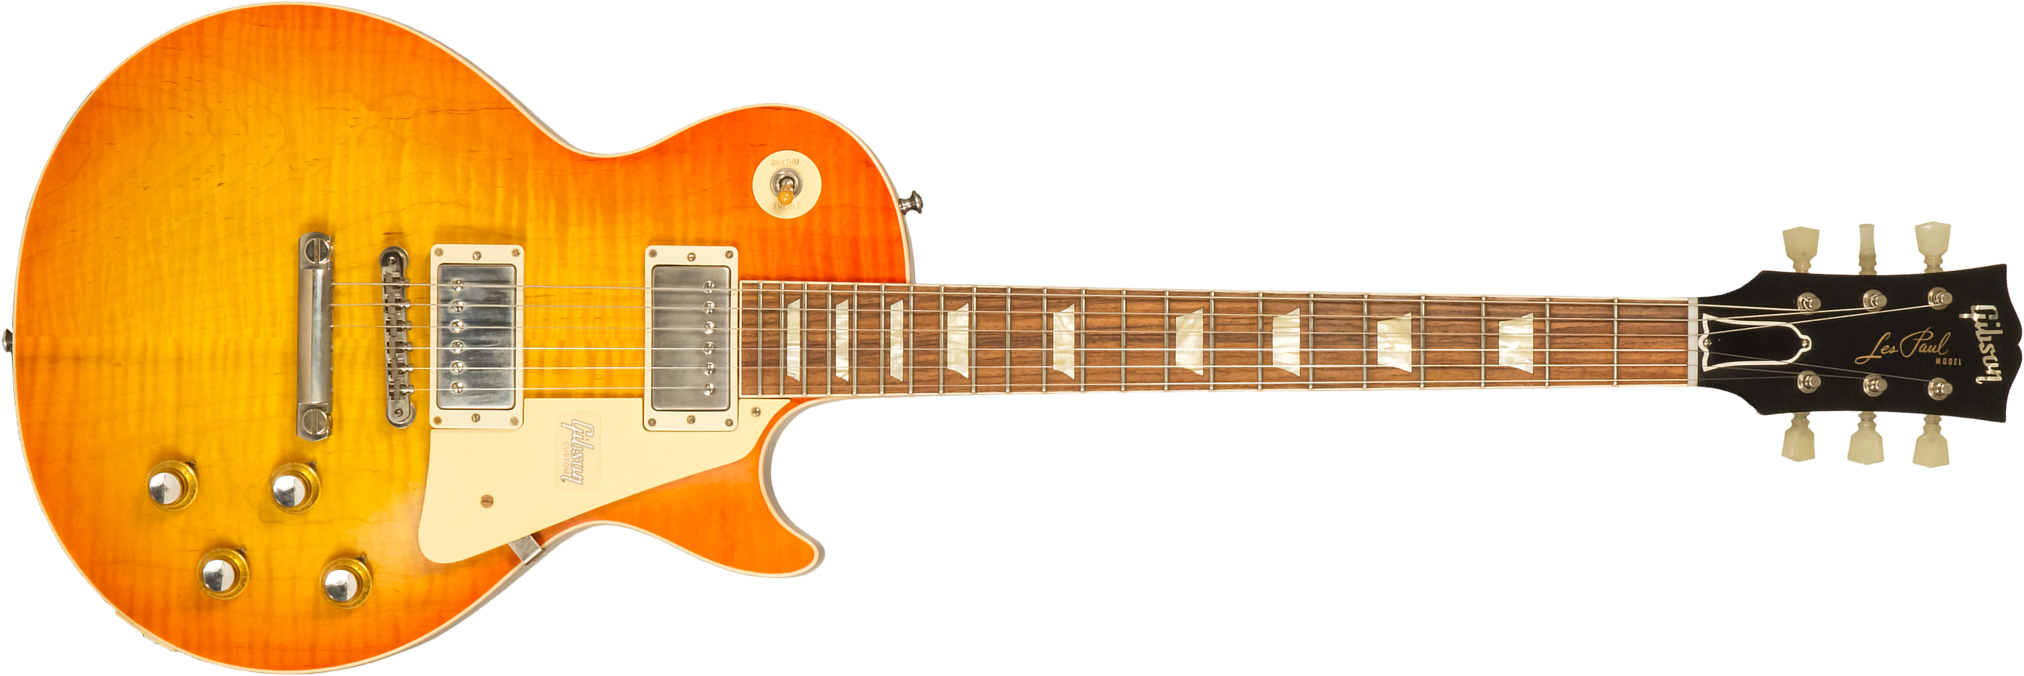 Gibson Custom Shop Les Paul Standard 1960 V2 60th Anniversary 2h Ht Rw #0600 - Vos Orange Lemon Fade - Enkel gesneden elektrische gitaar - Main pictur